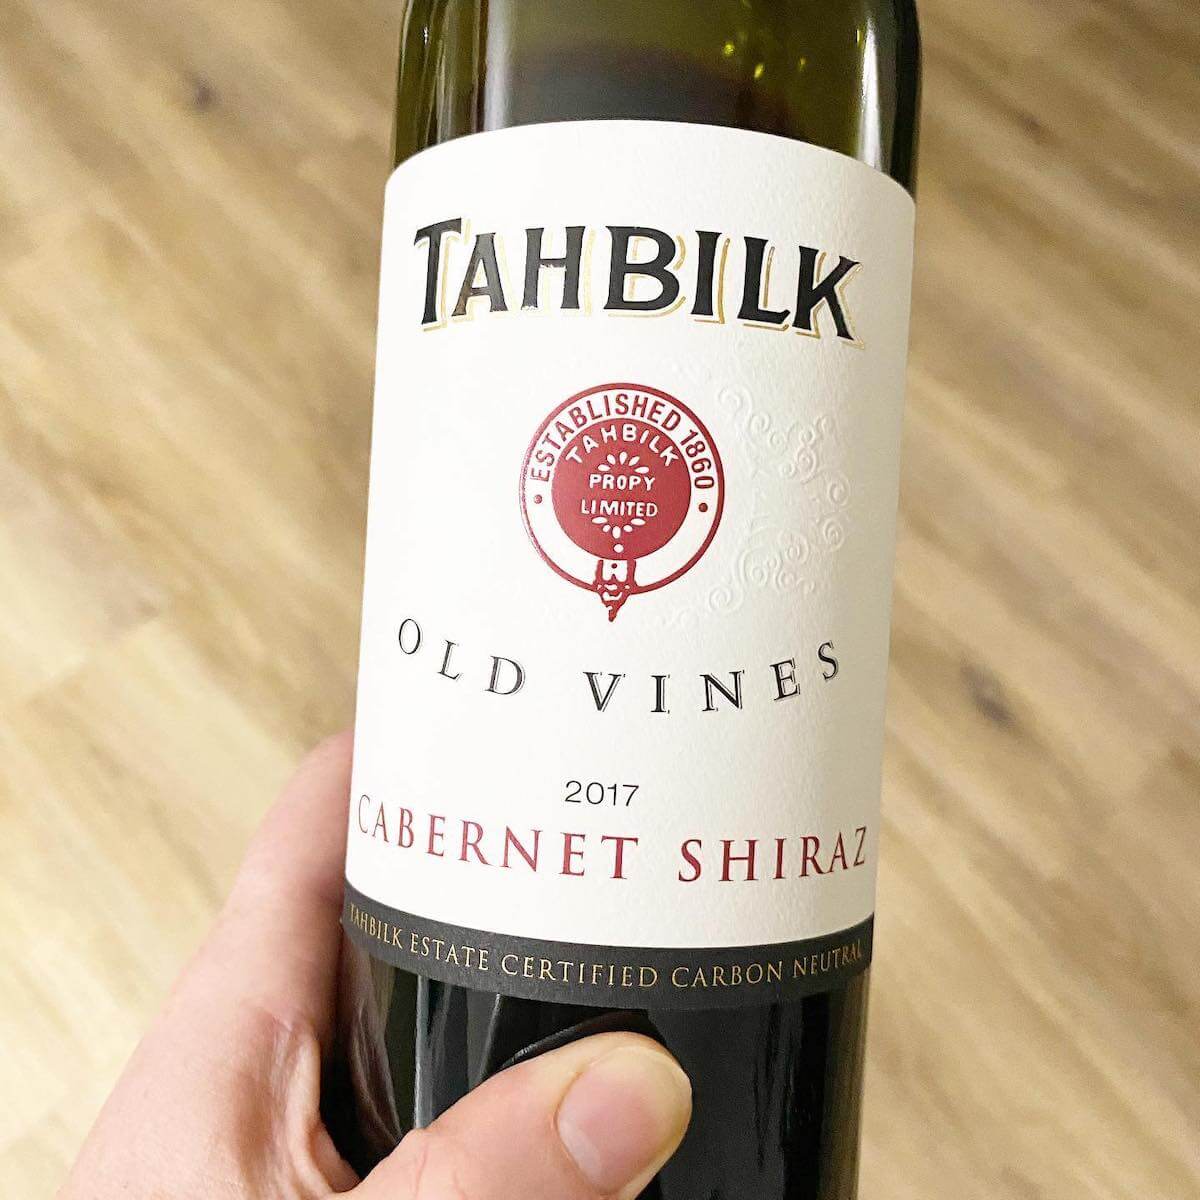 Tahbilk Old Vines 2017 Cabernet Shiraz